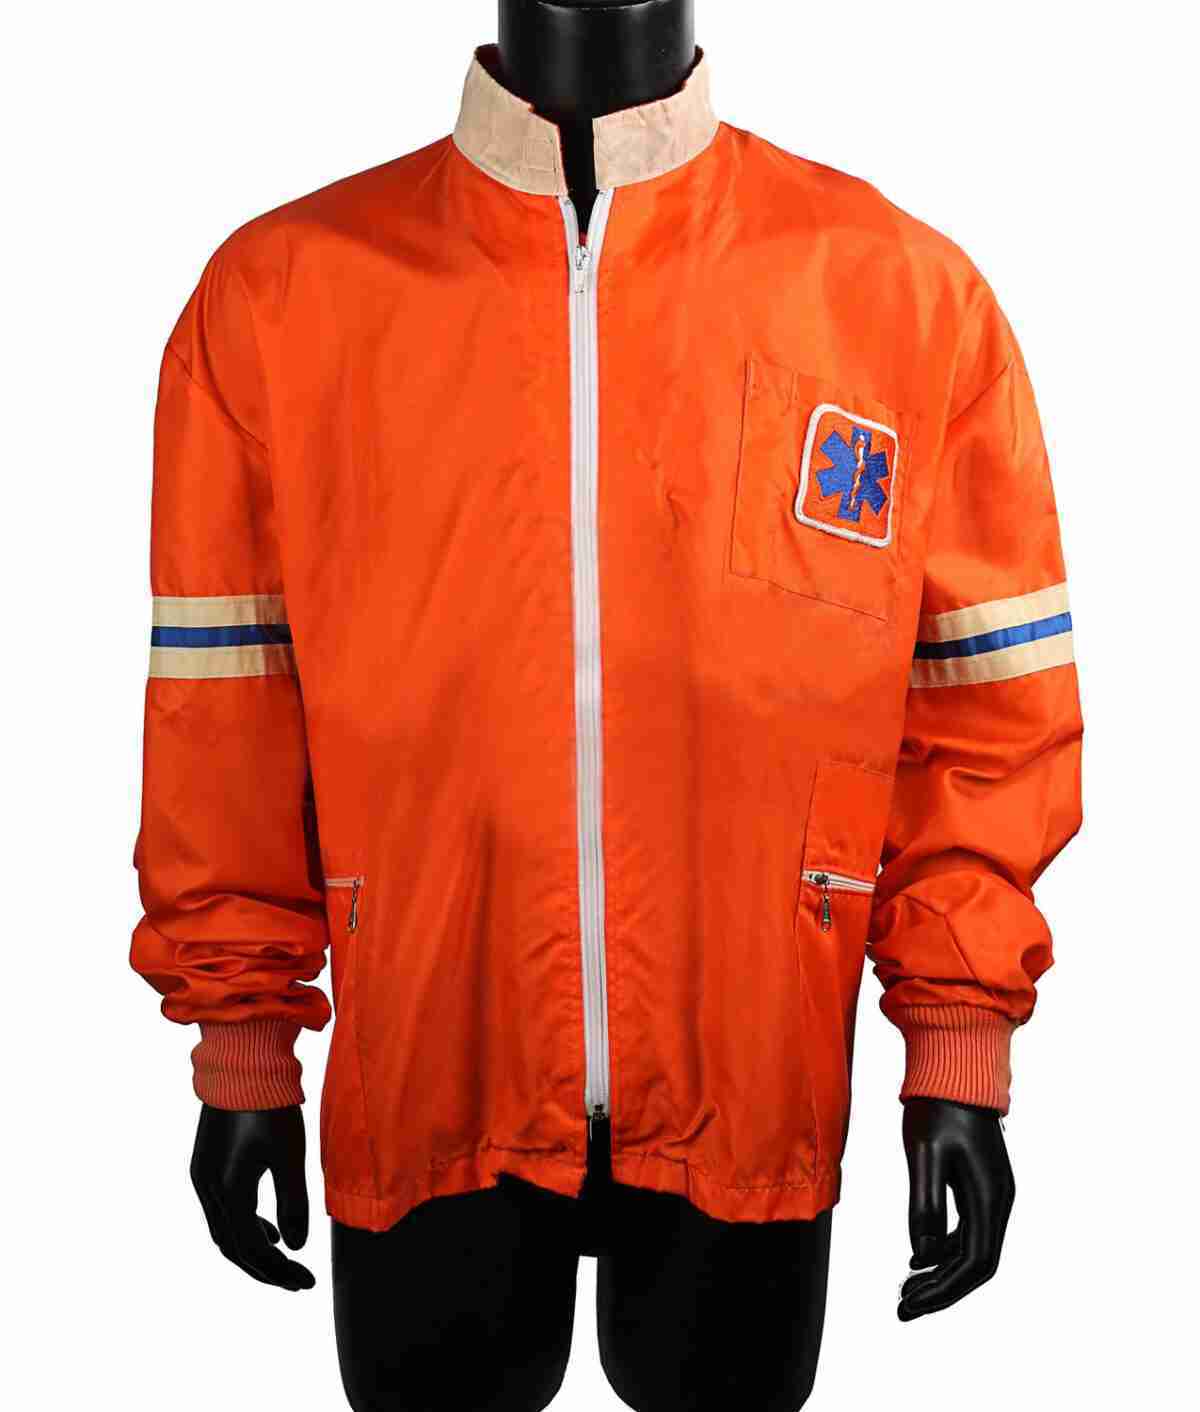 Burt Reynolds' orange jacket from the The Cannonball Run